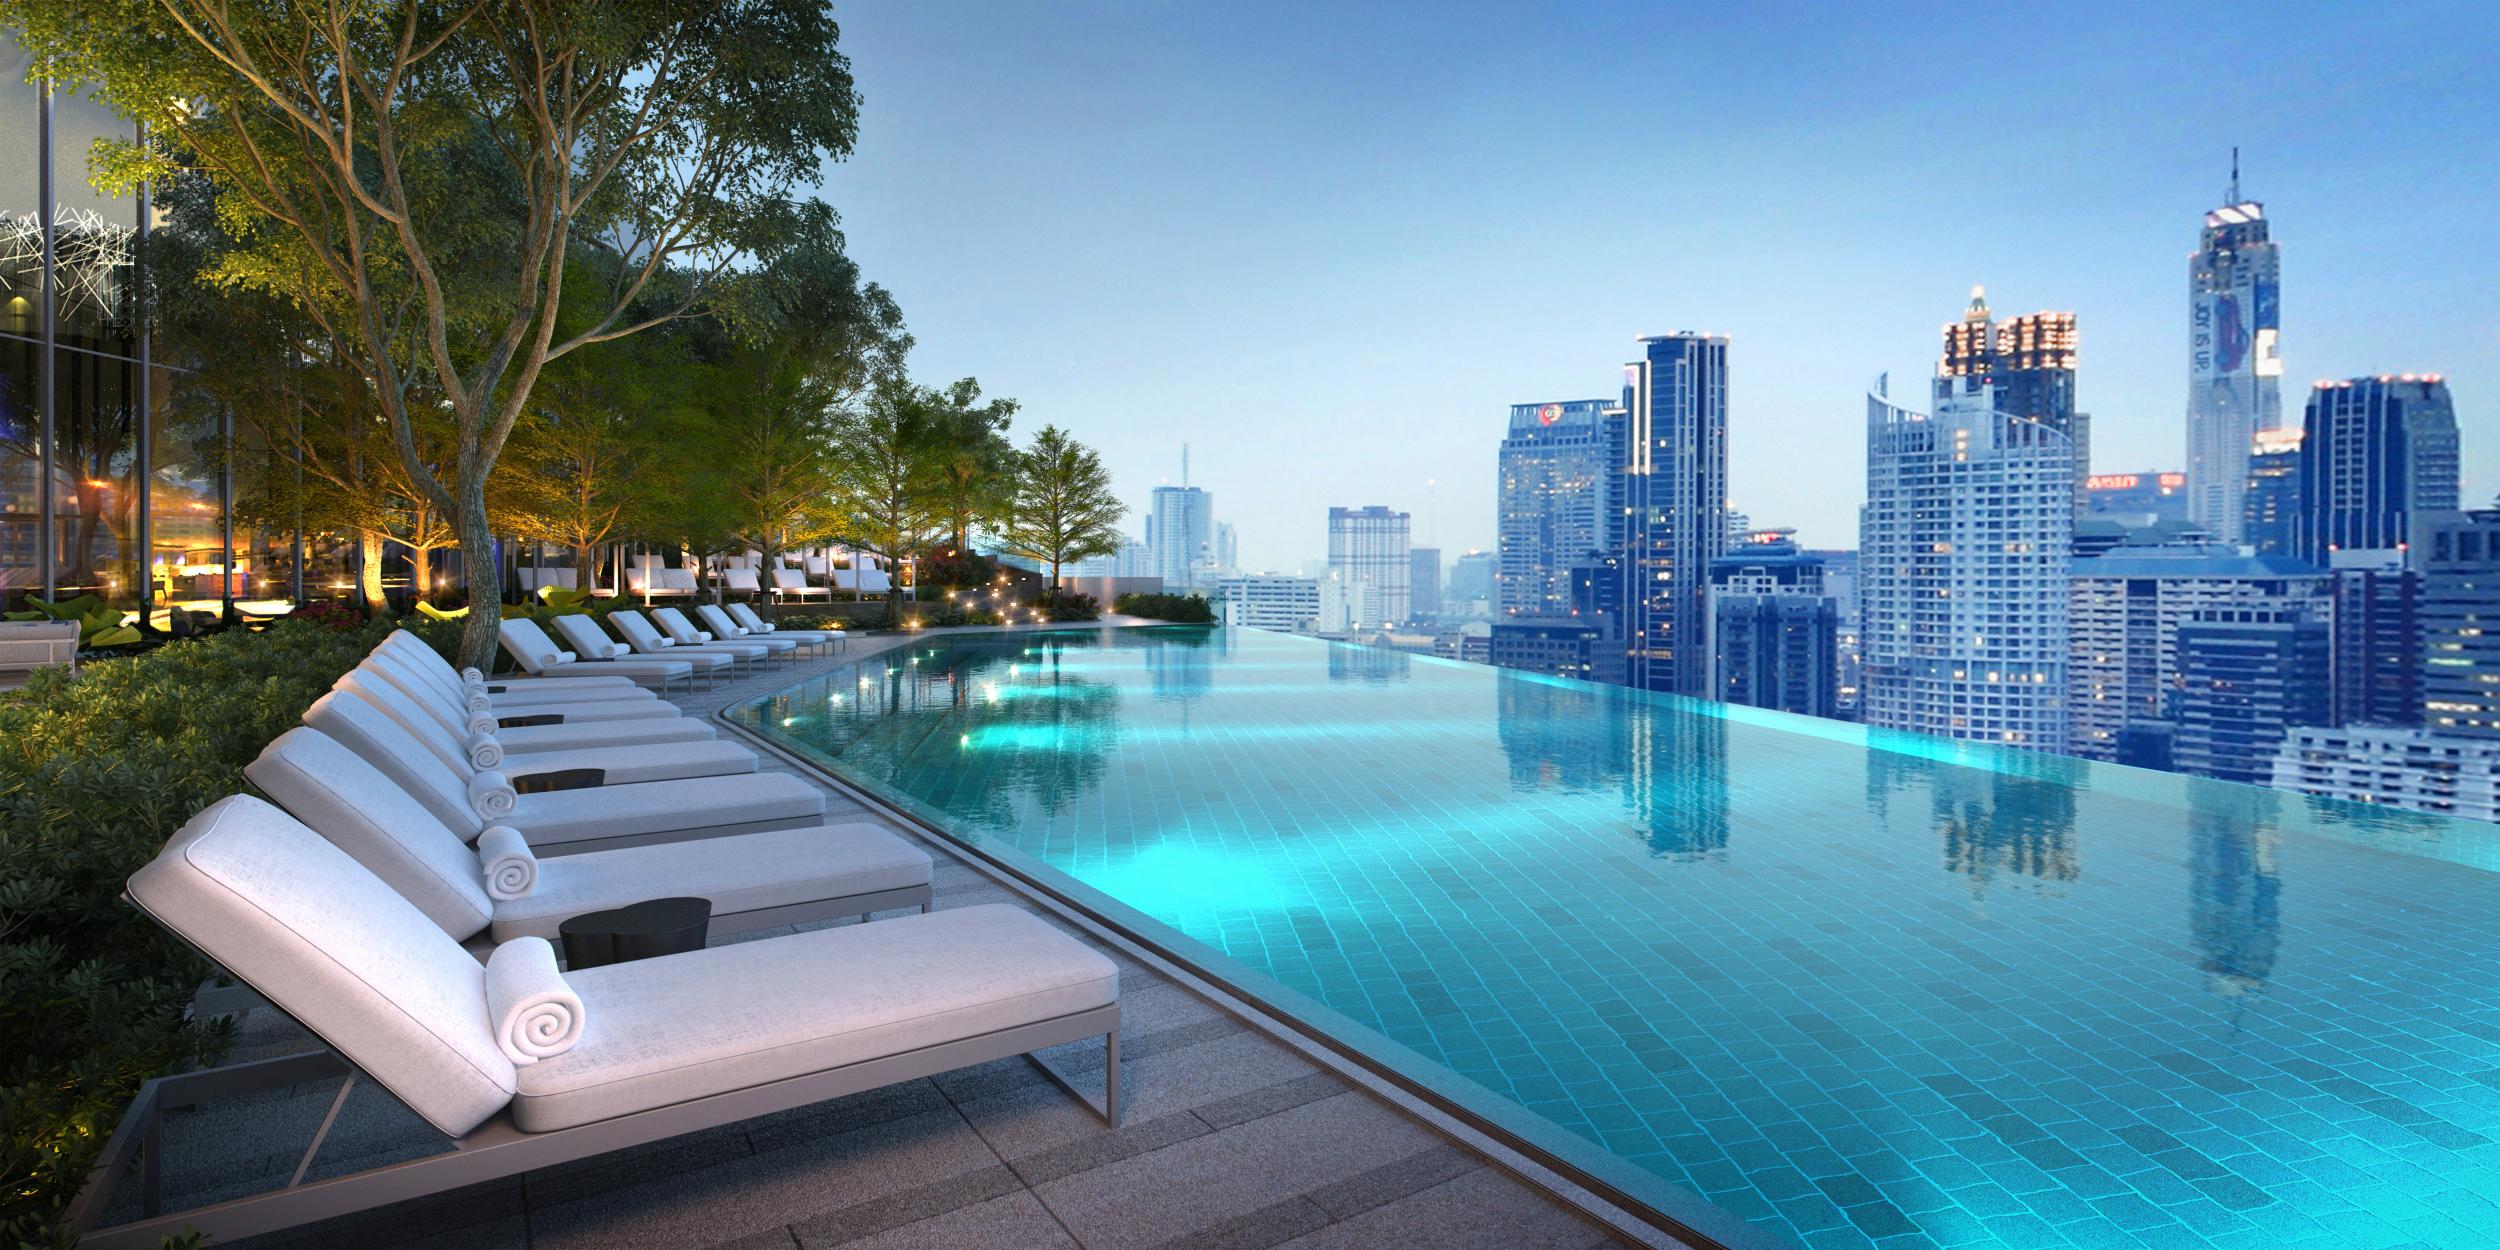 Park Hyatt Bangkok's rooftop infinity pool offers incredible views of the city